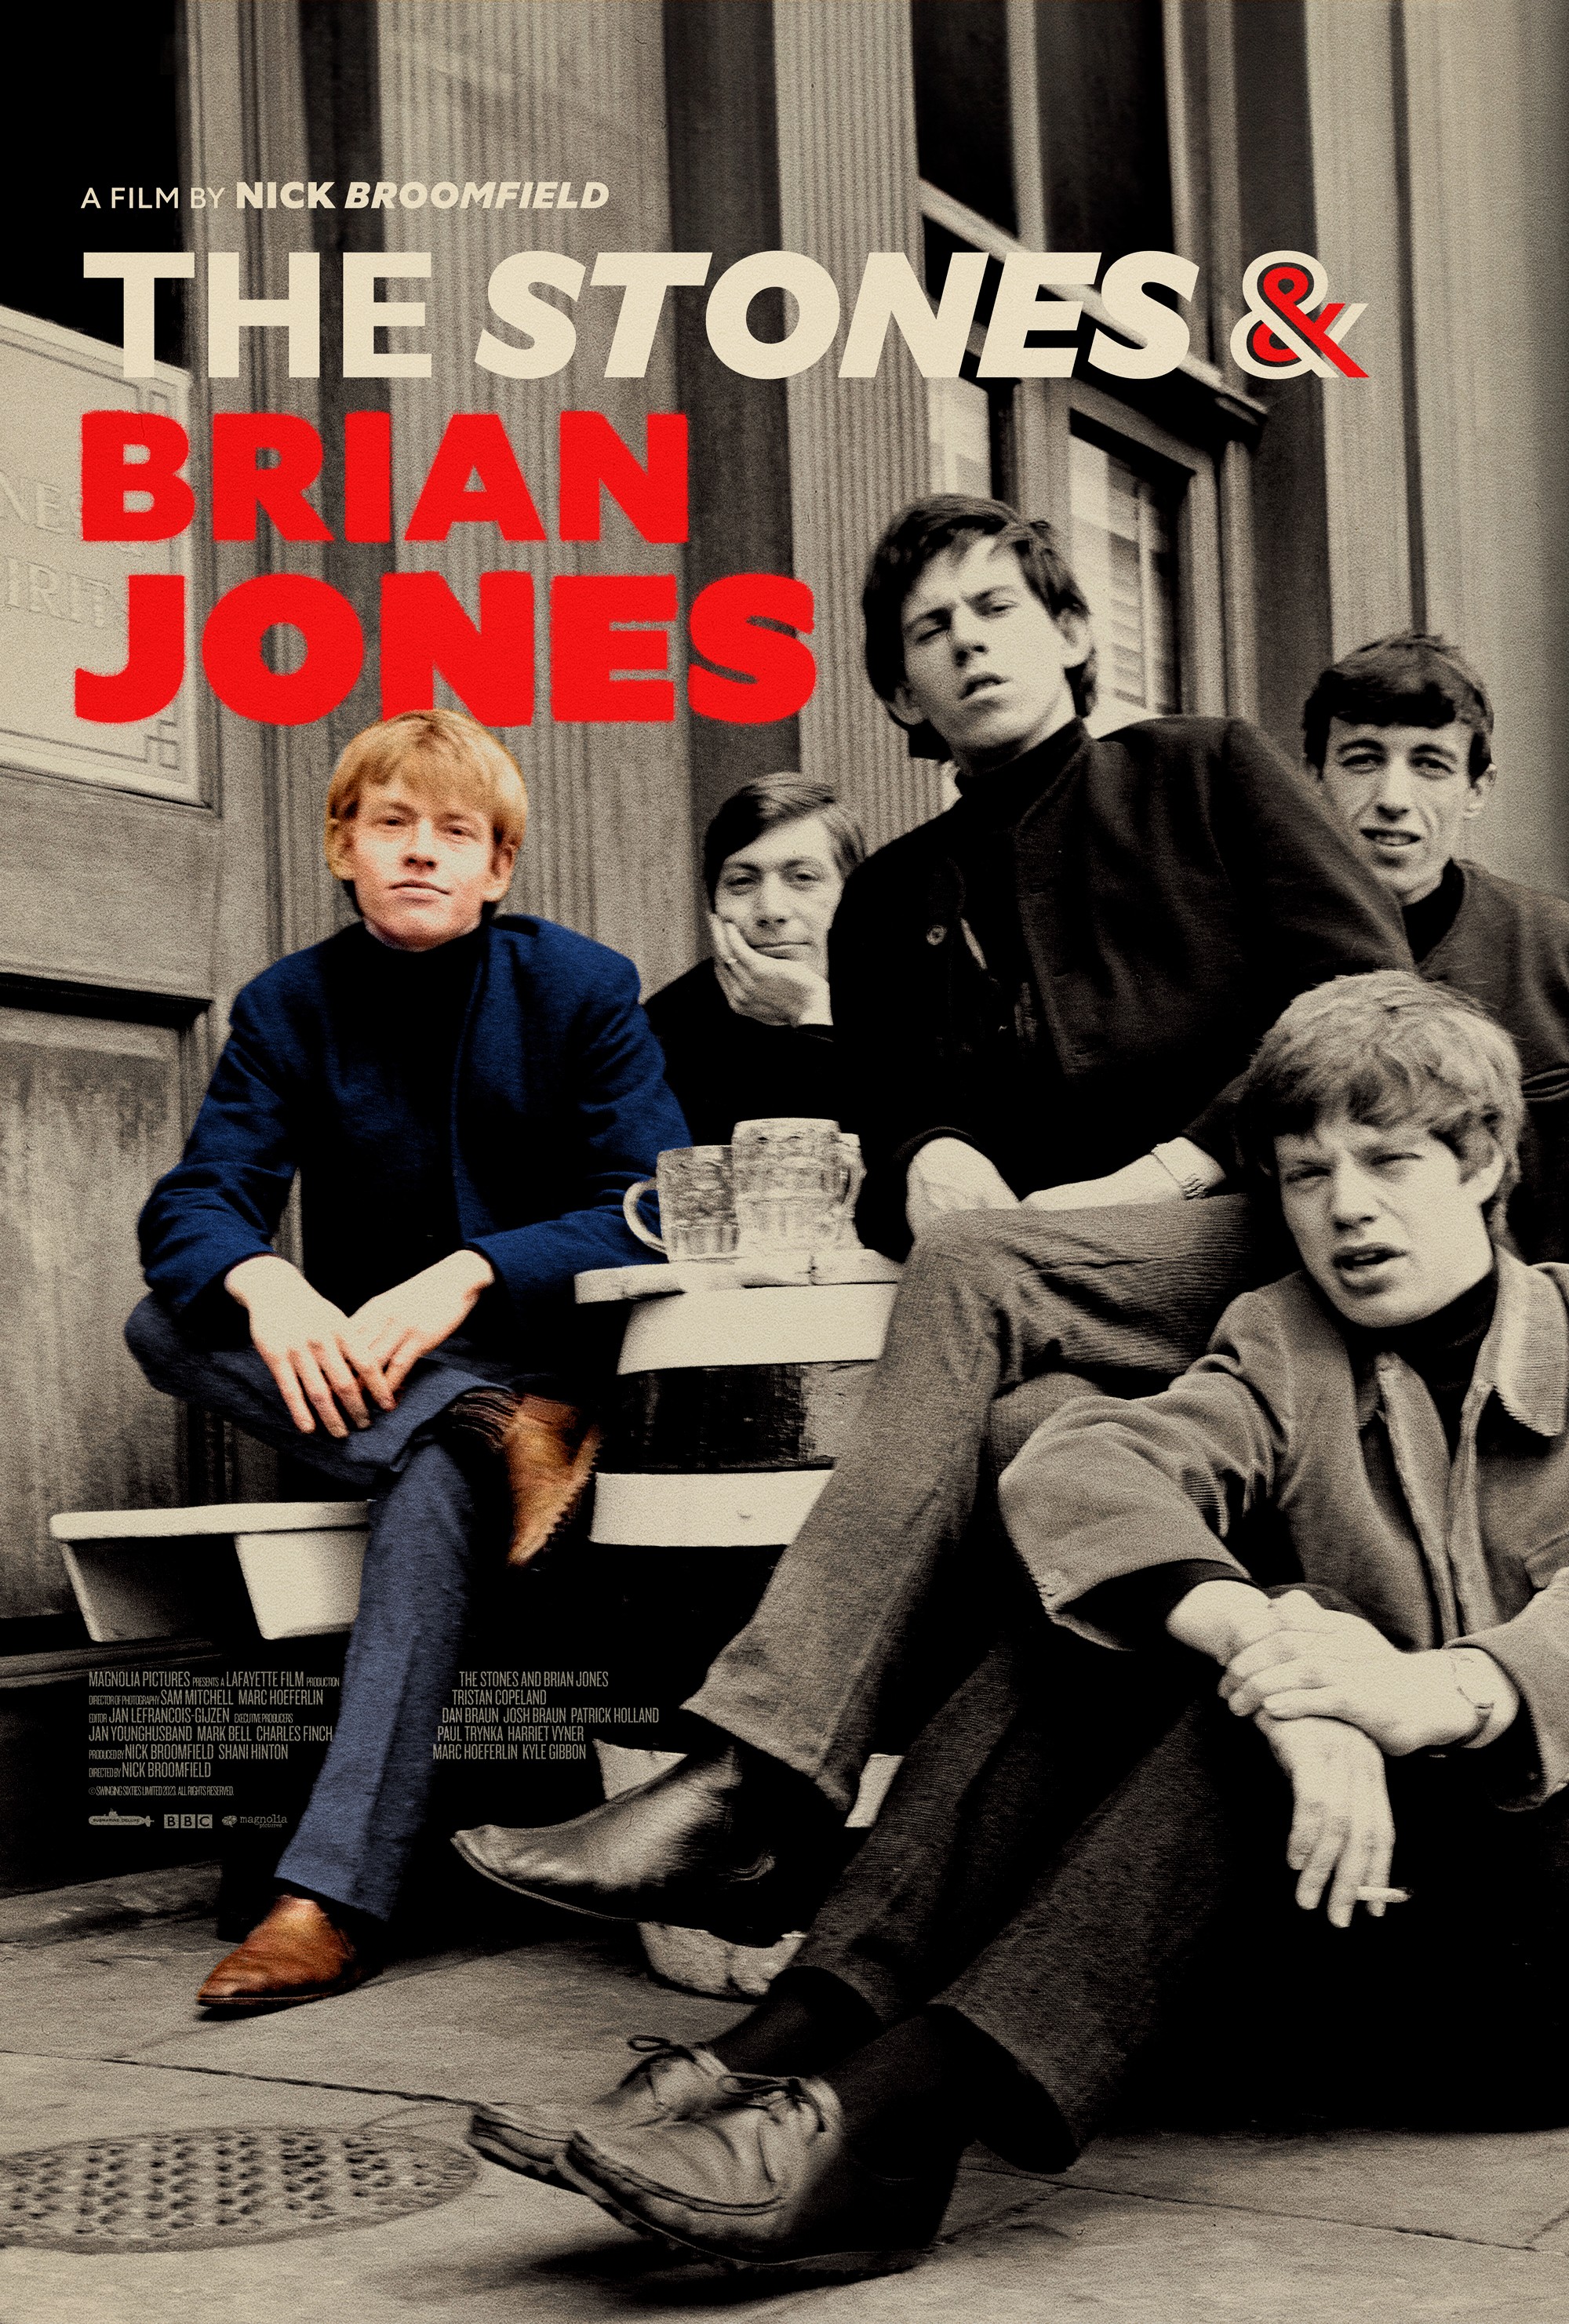 Brian Jones - This Day In Music